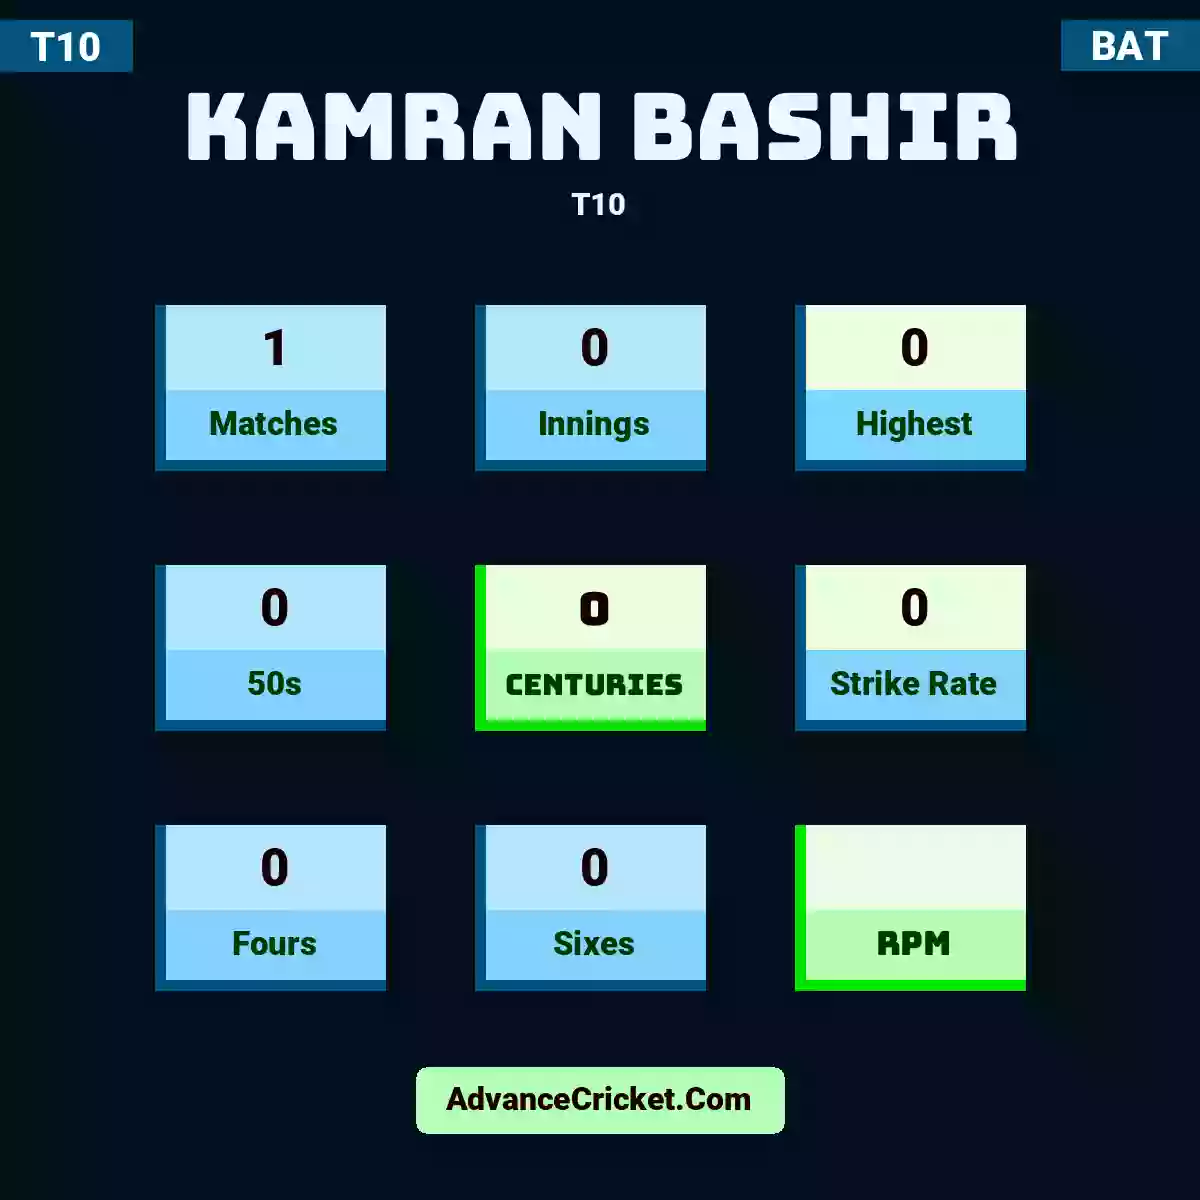 Kamran Bashir T10 , Kamran Bashir played 1 matches, scored 0 runs as highest, 0 half-centuries, and 0 centuries, with a strike rate of 0. K.Bashir hit 0 fours and 0 sixes.